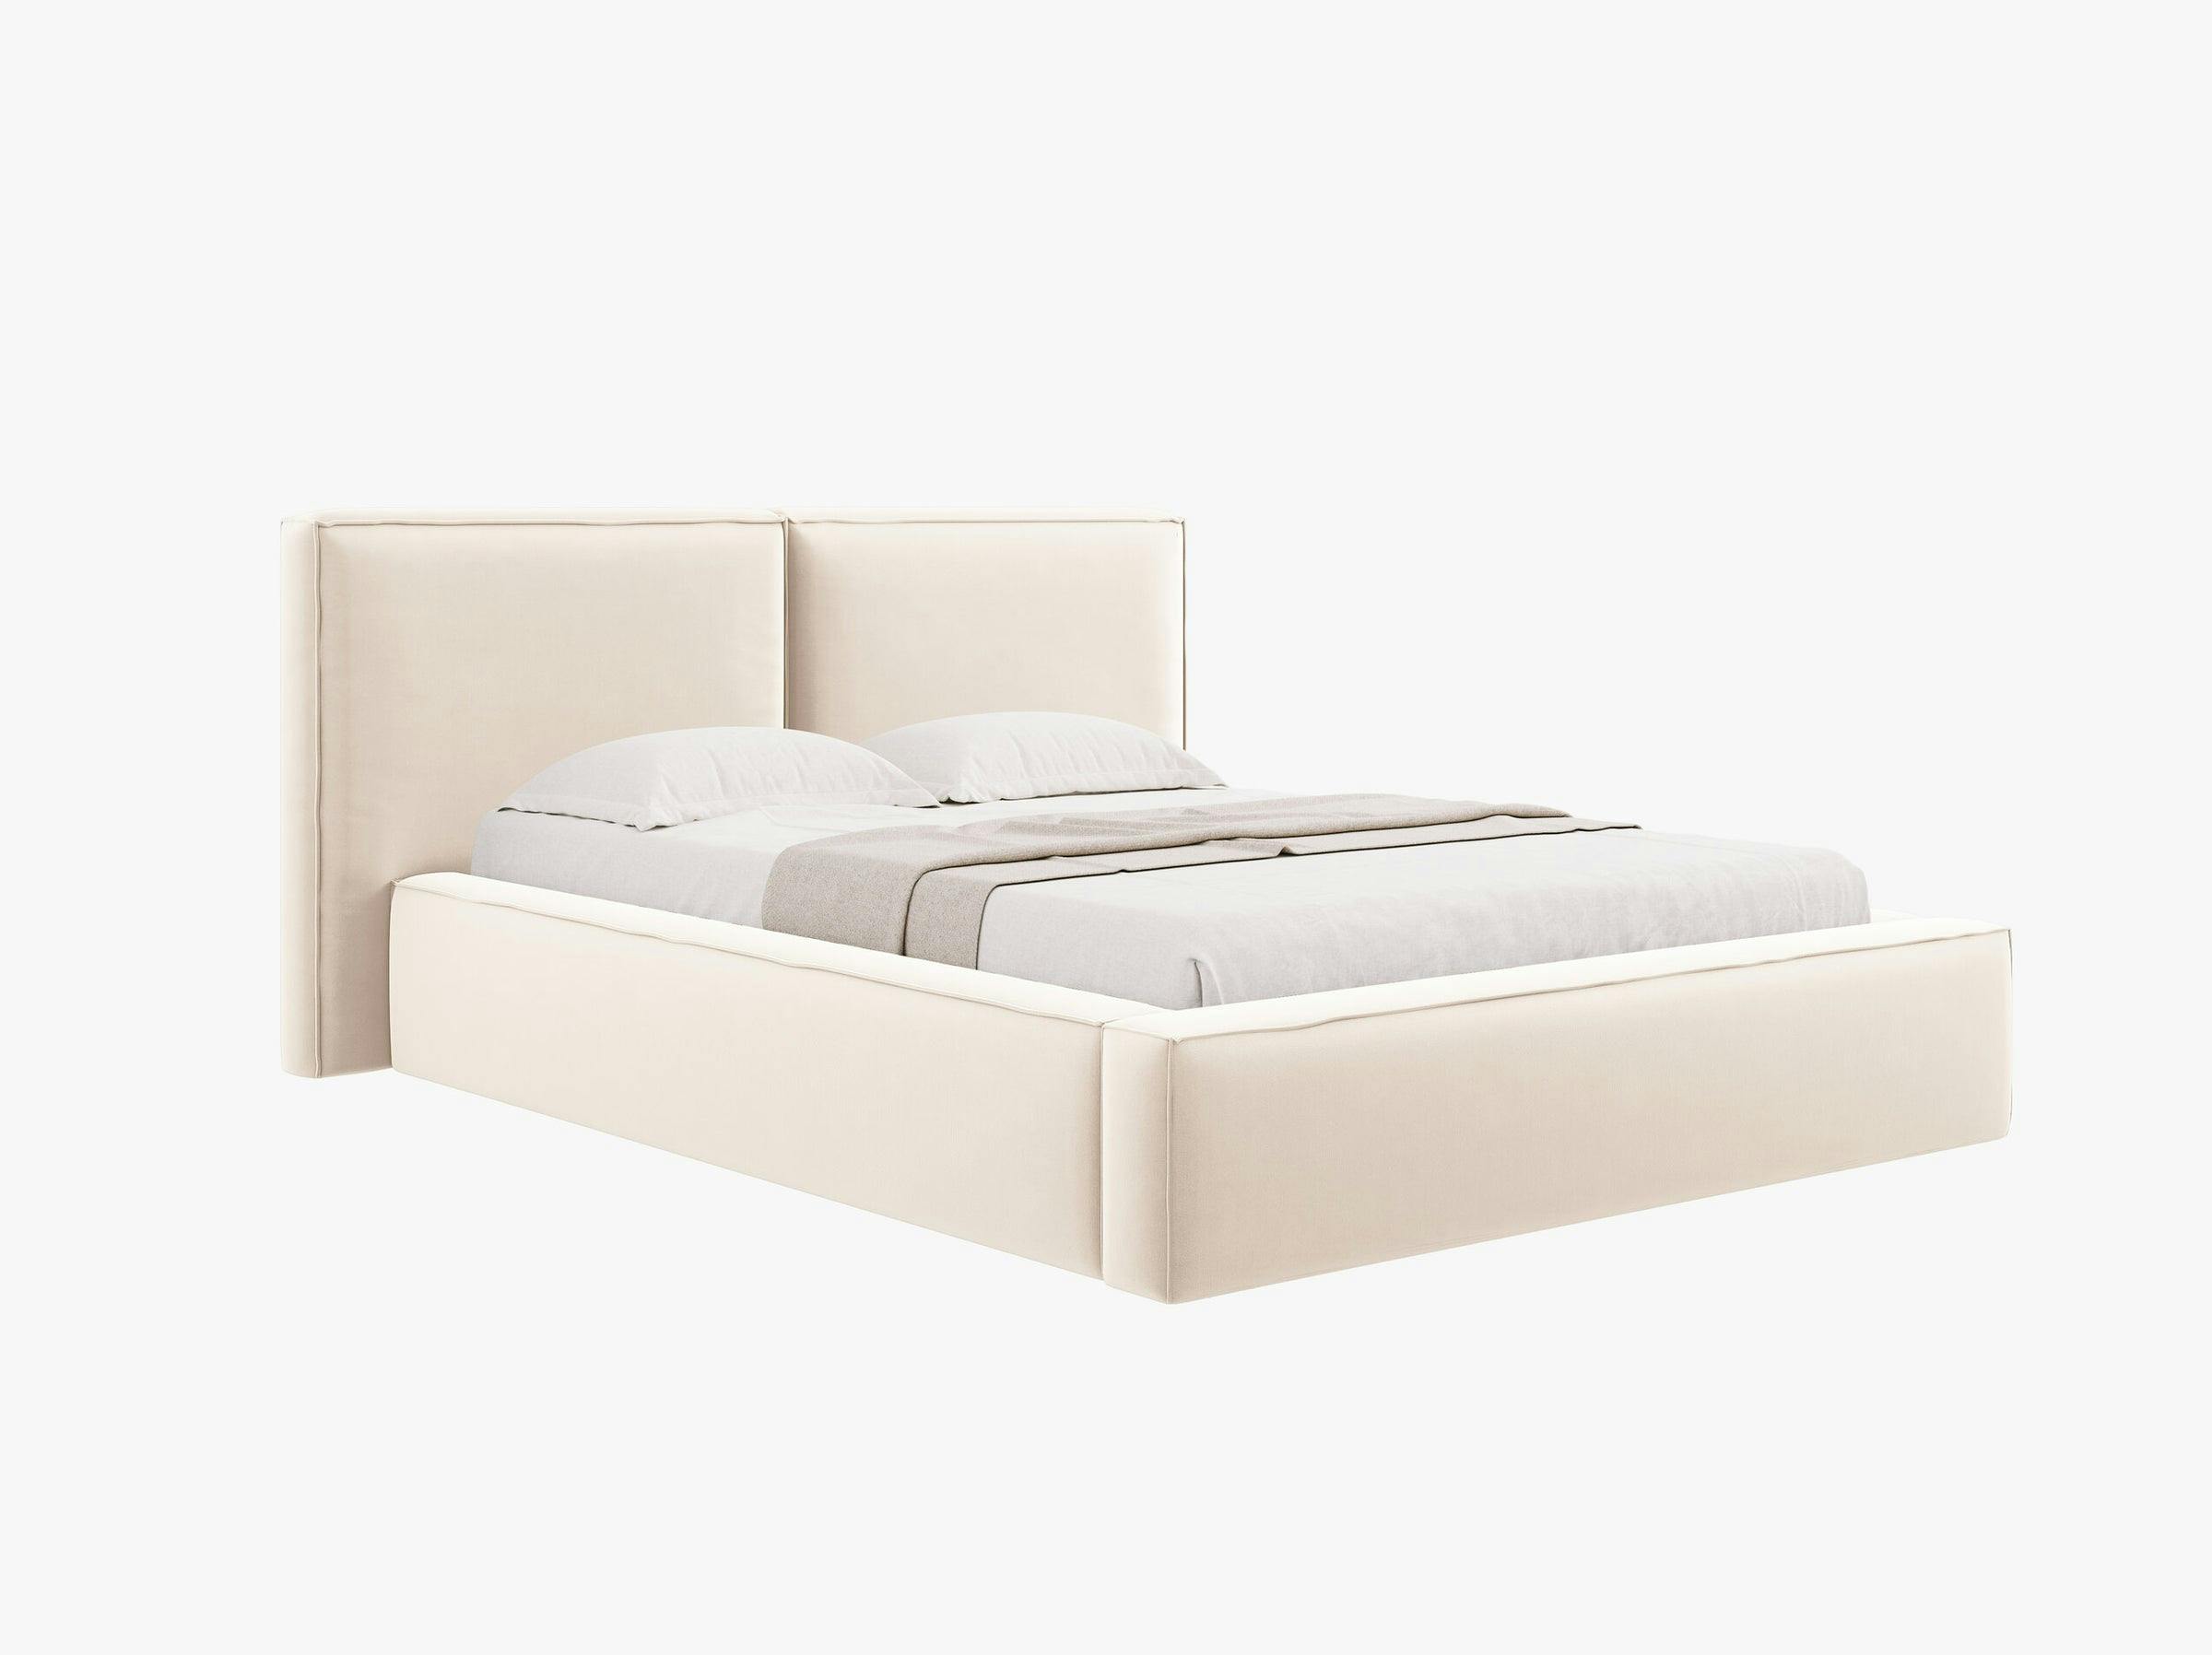 Jodie beds & mattresses velvet light beige